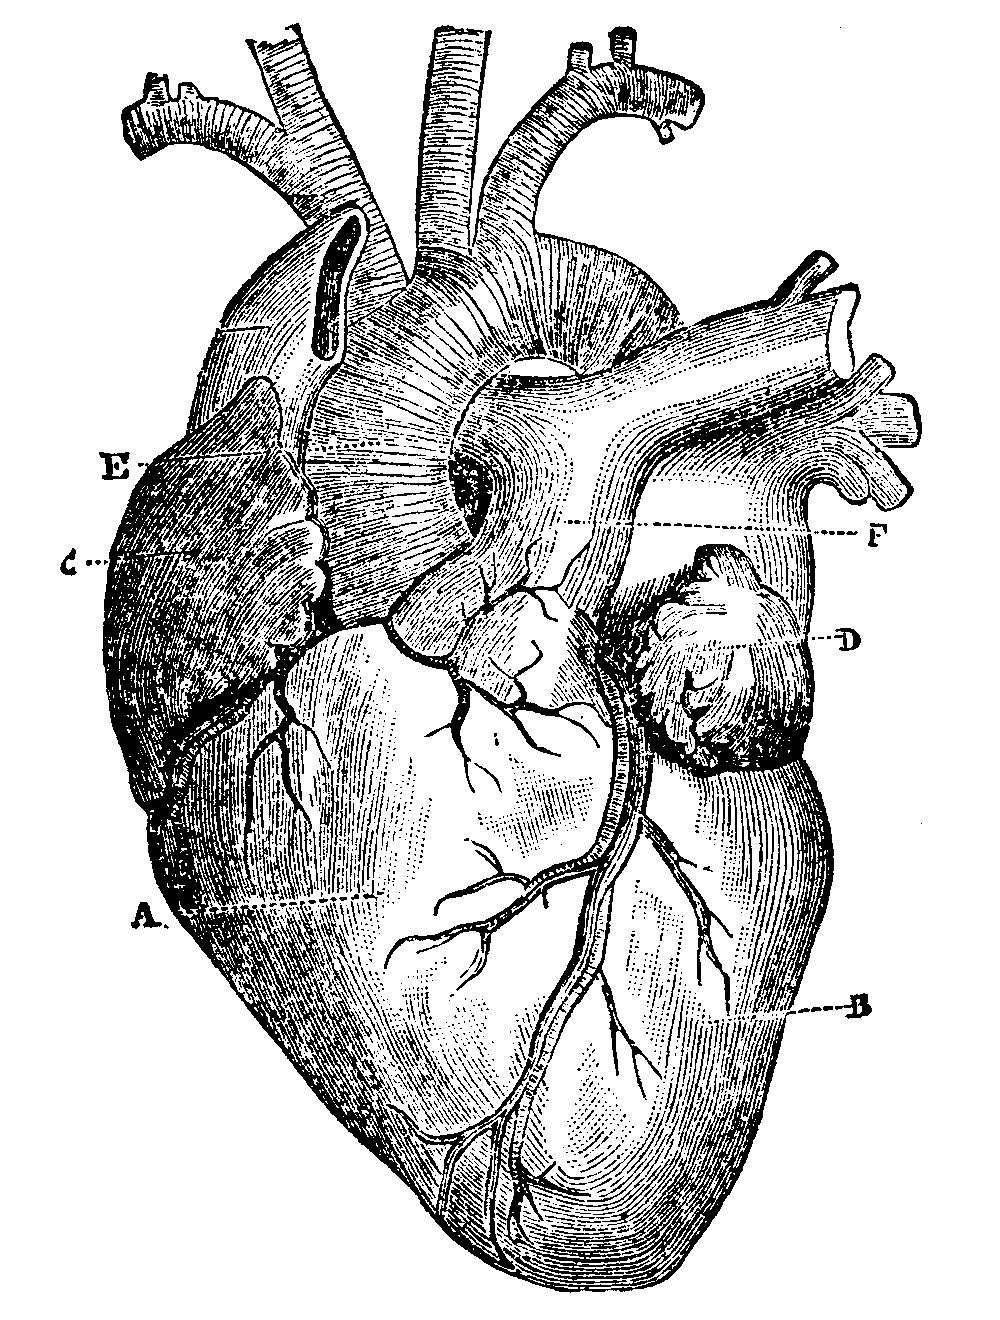 heart 4